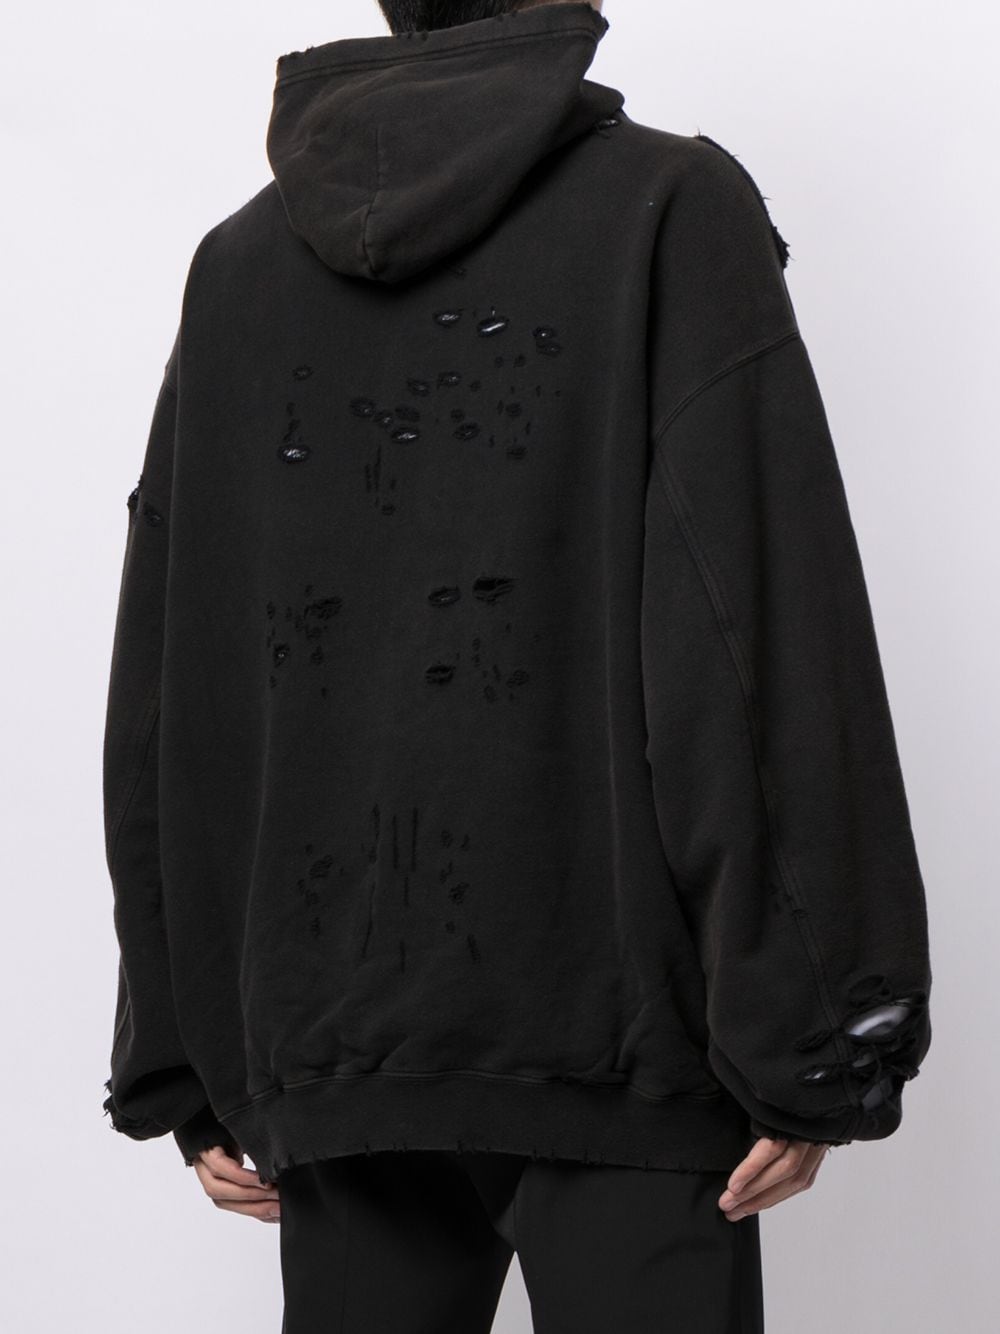 фото Balenciaga ripped oversize logo hoodie